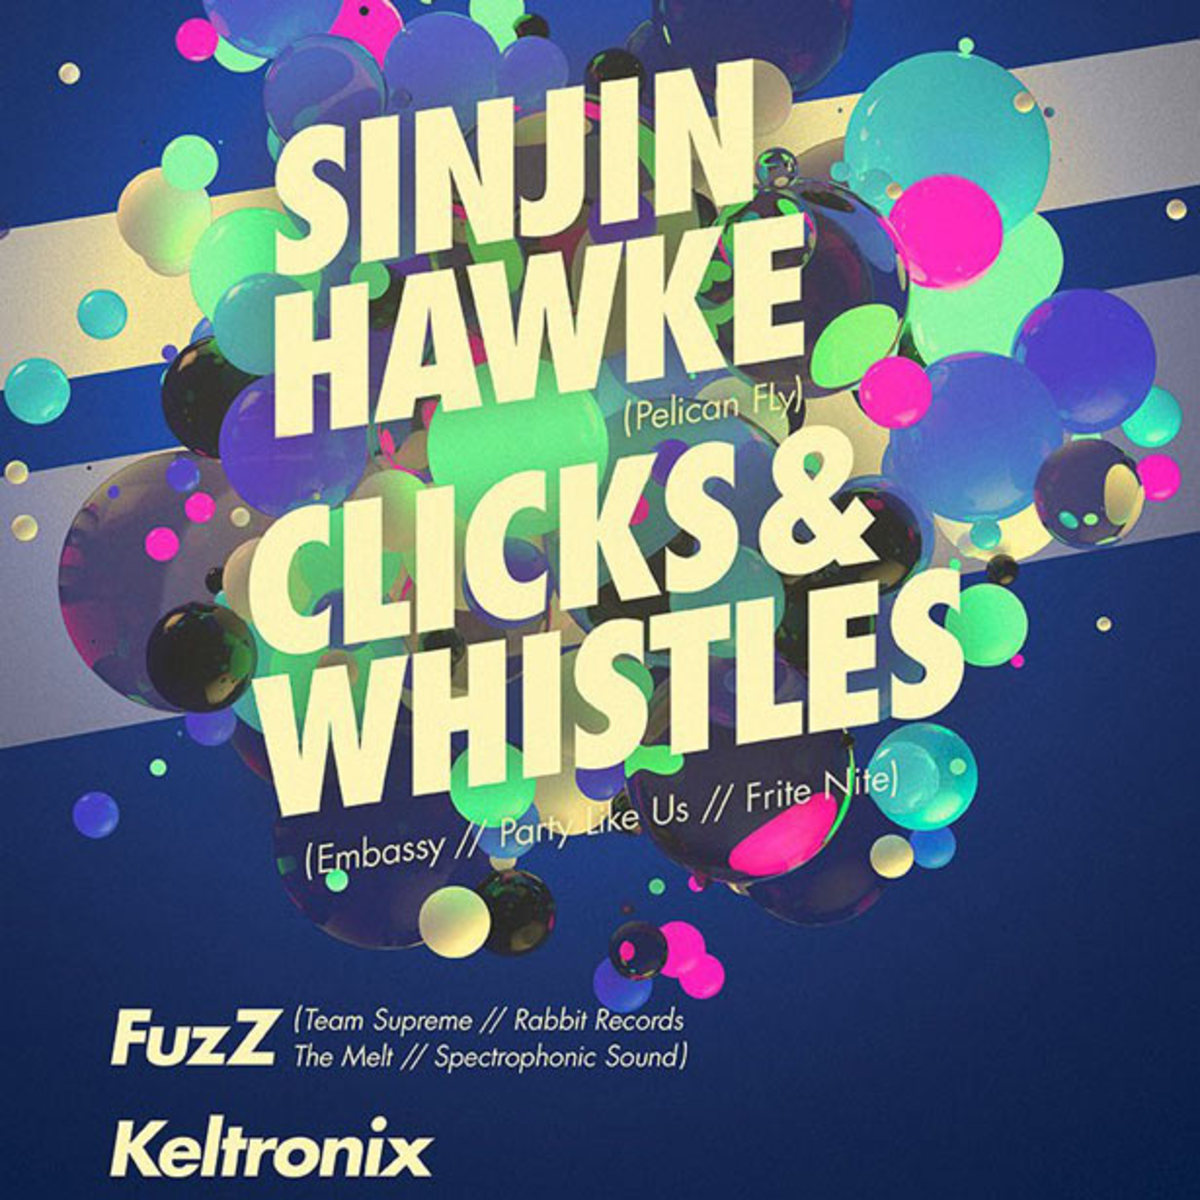 IHC Presents: Sinjin Hawke, Clicks And Whistles, Fuzz, Keltronix + Win Tickets!